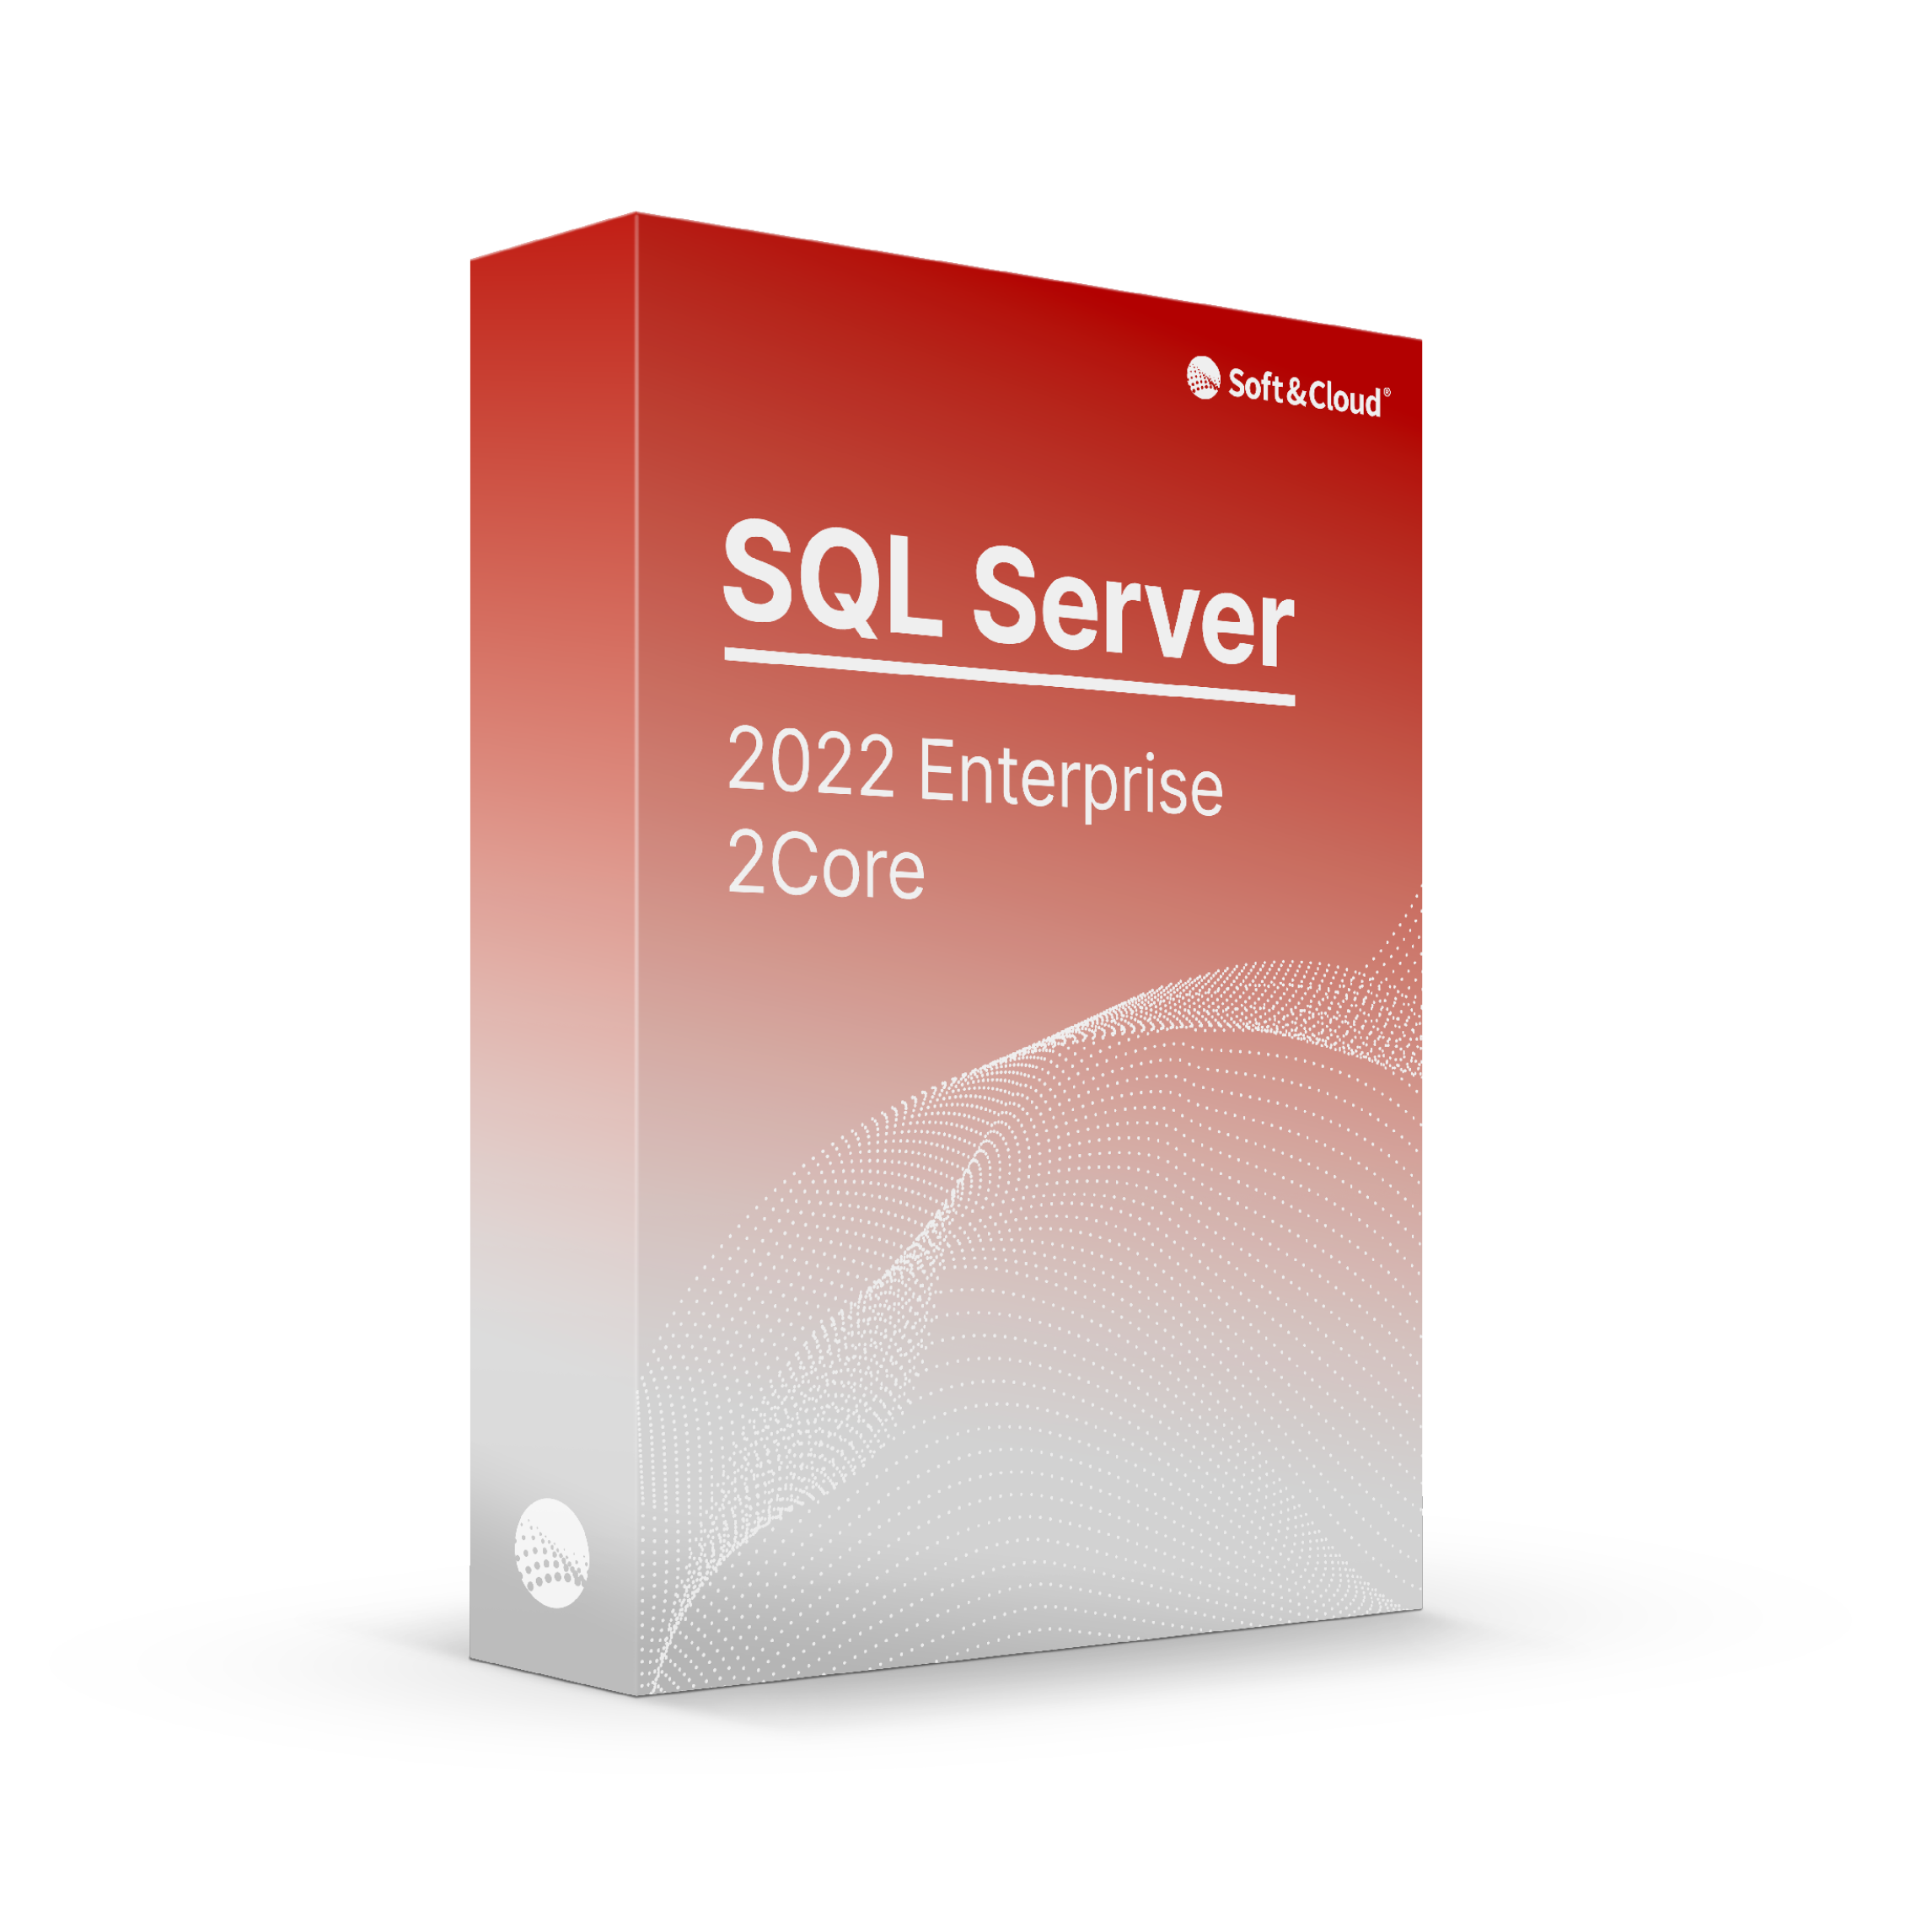 SQL Server 2022 Enterprise 2Core